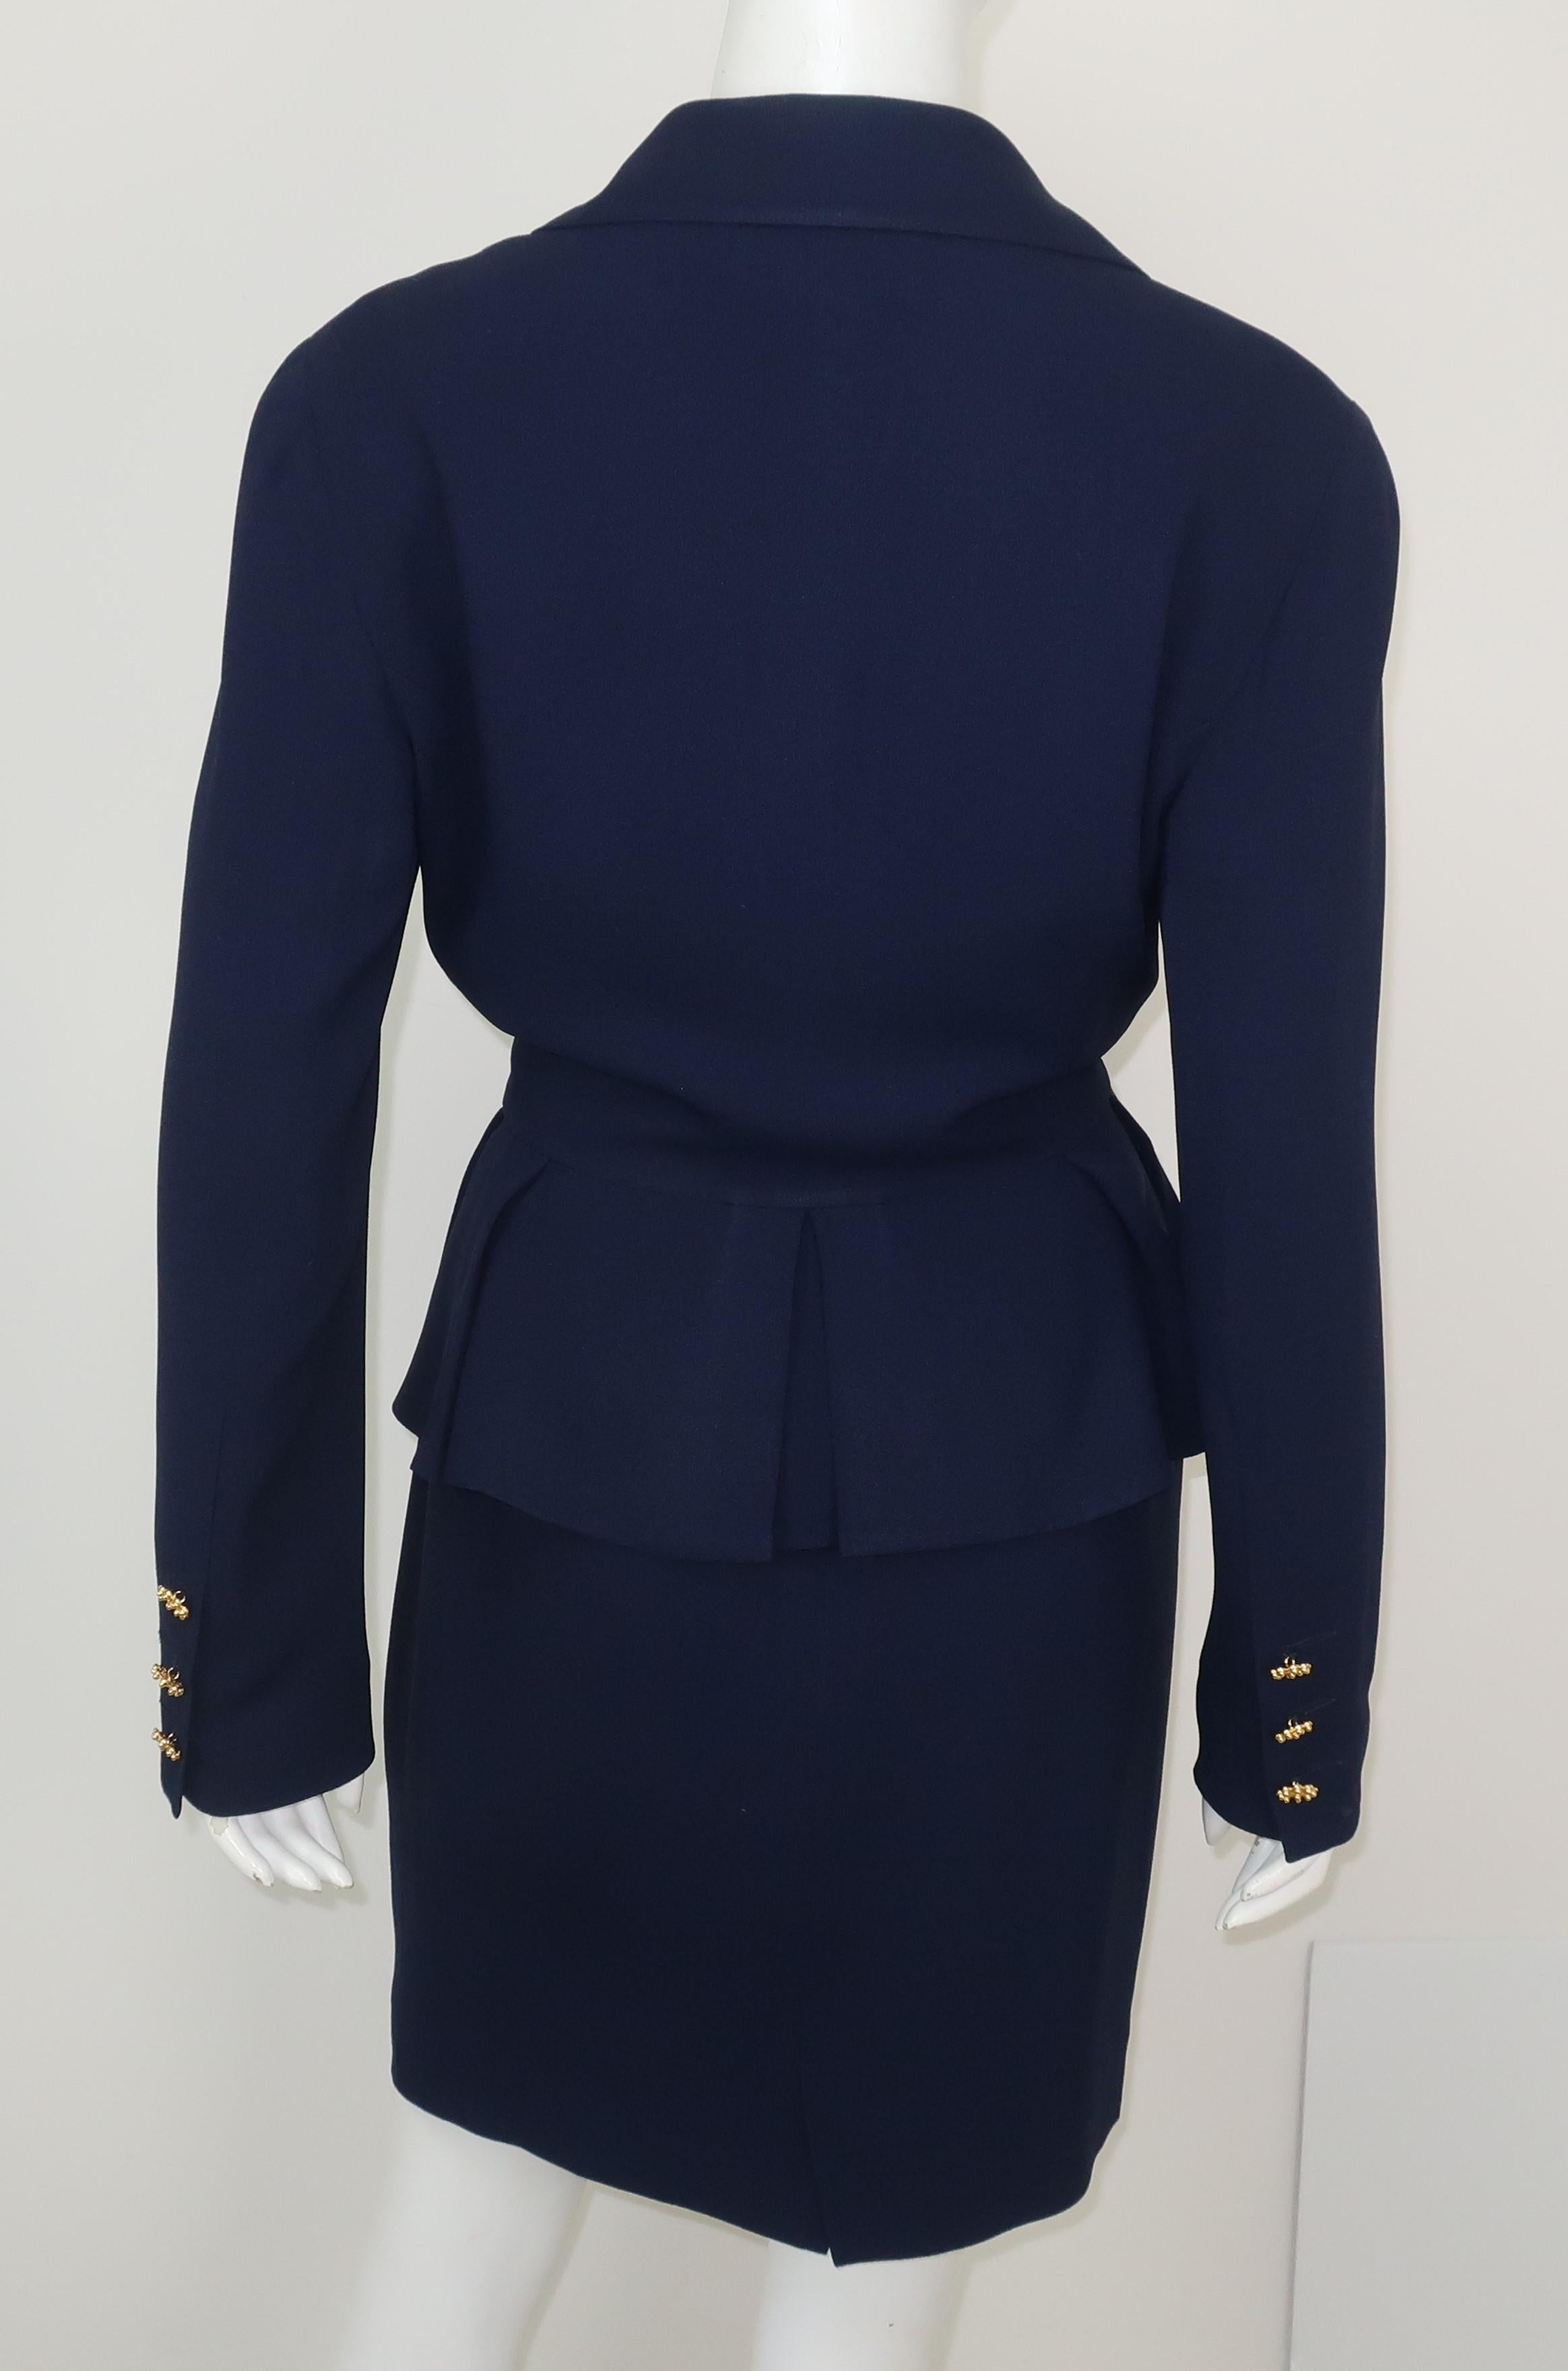 Karl Lagerfeld Navy Blue Peplum Skirt Suit C.1990 2